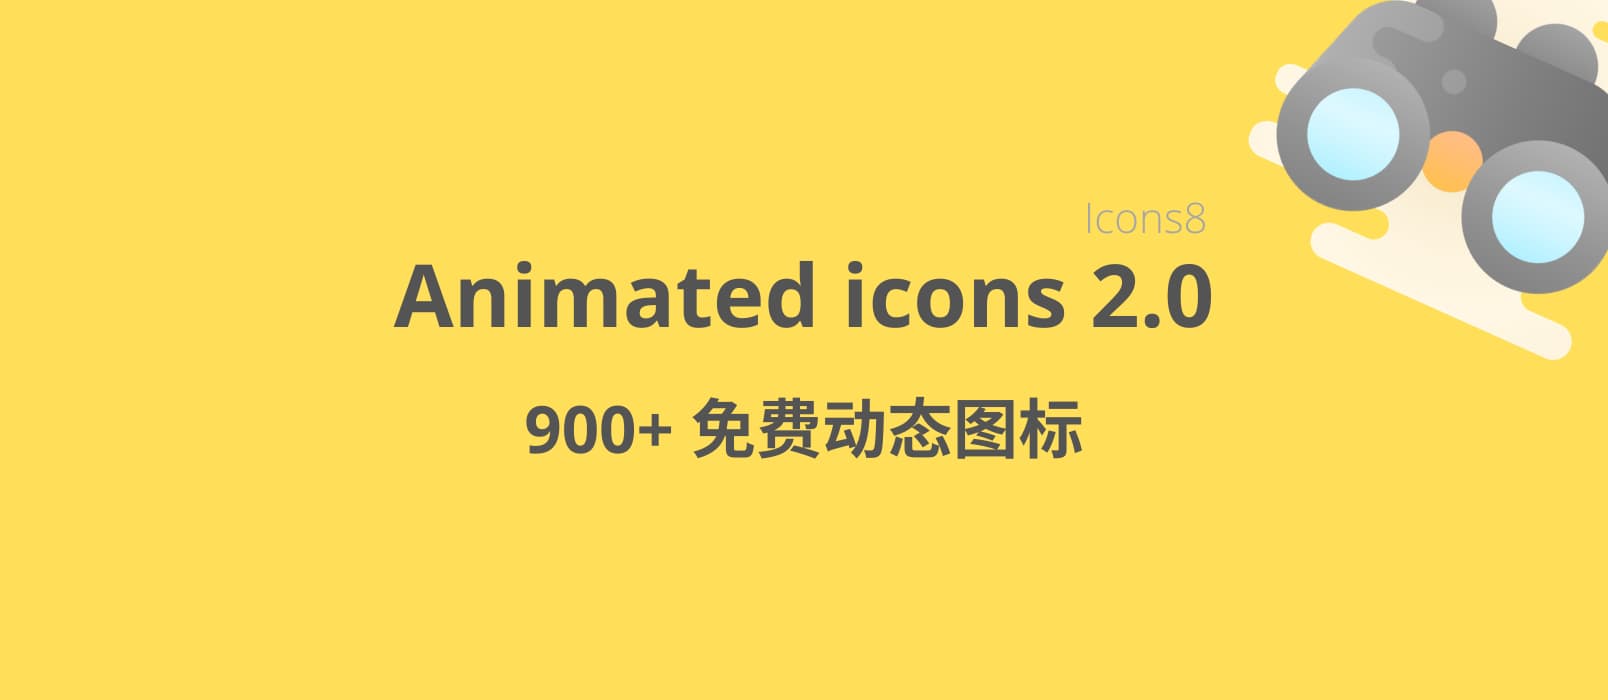 Icons8 发布 Animated icons 2.0，900+ 会动的图标，免费可商用 1